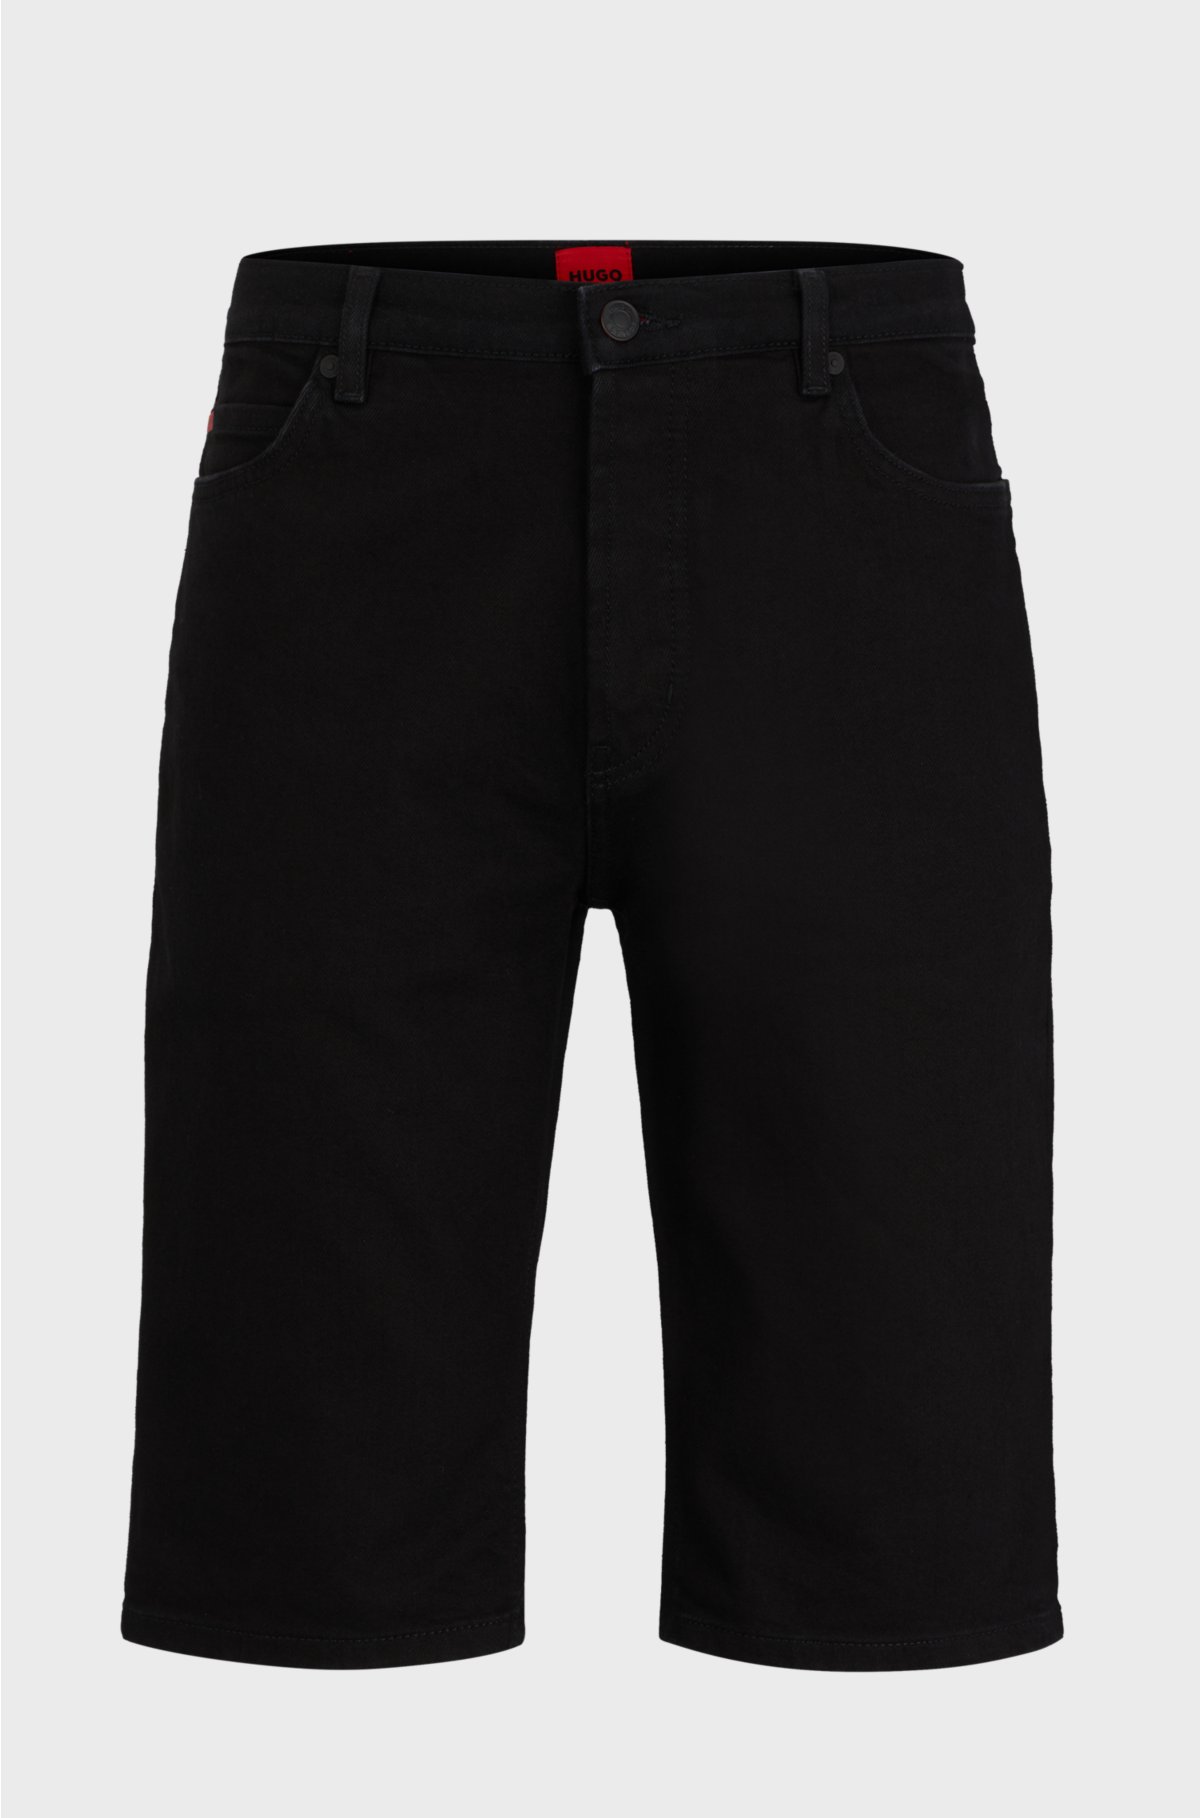 Tapered-fit shorts in black salt-and-pepper denim, Black